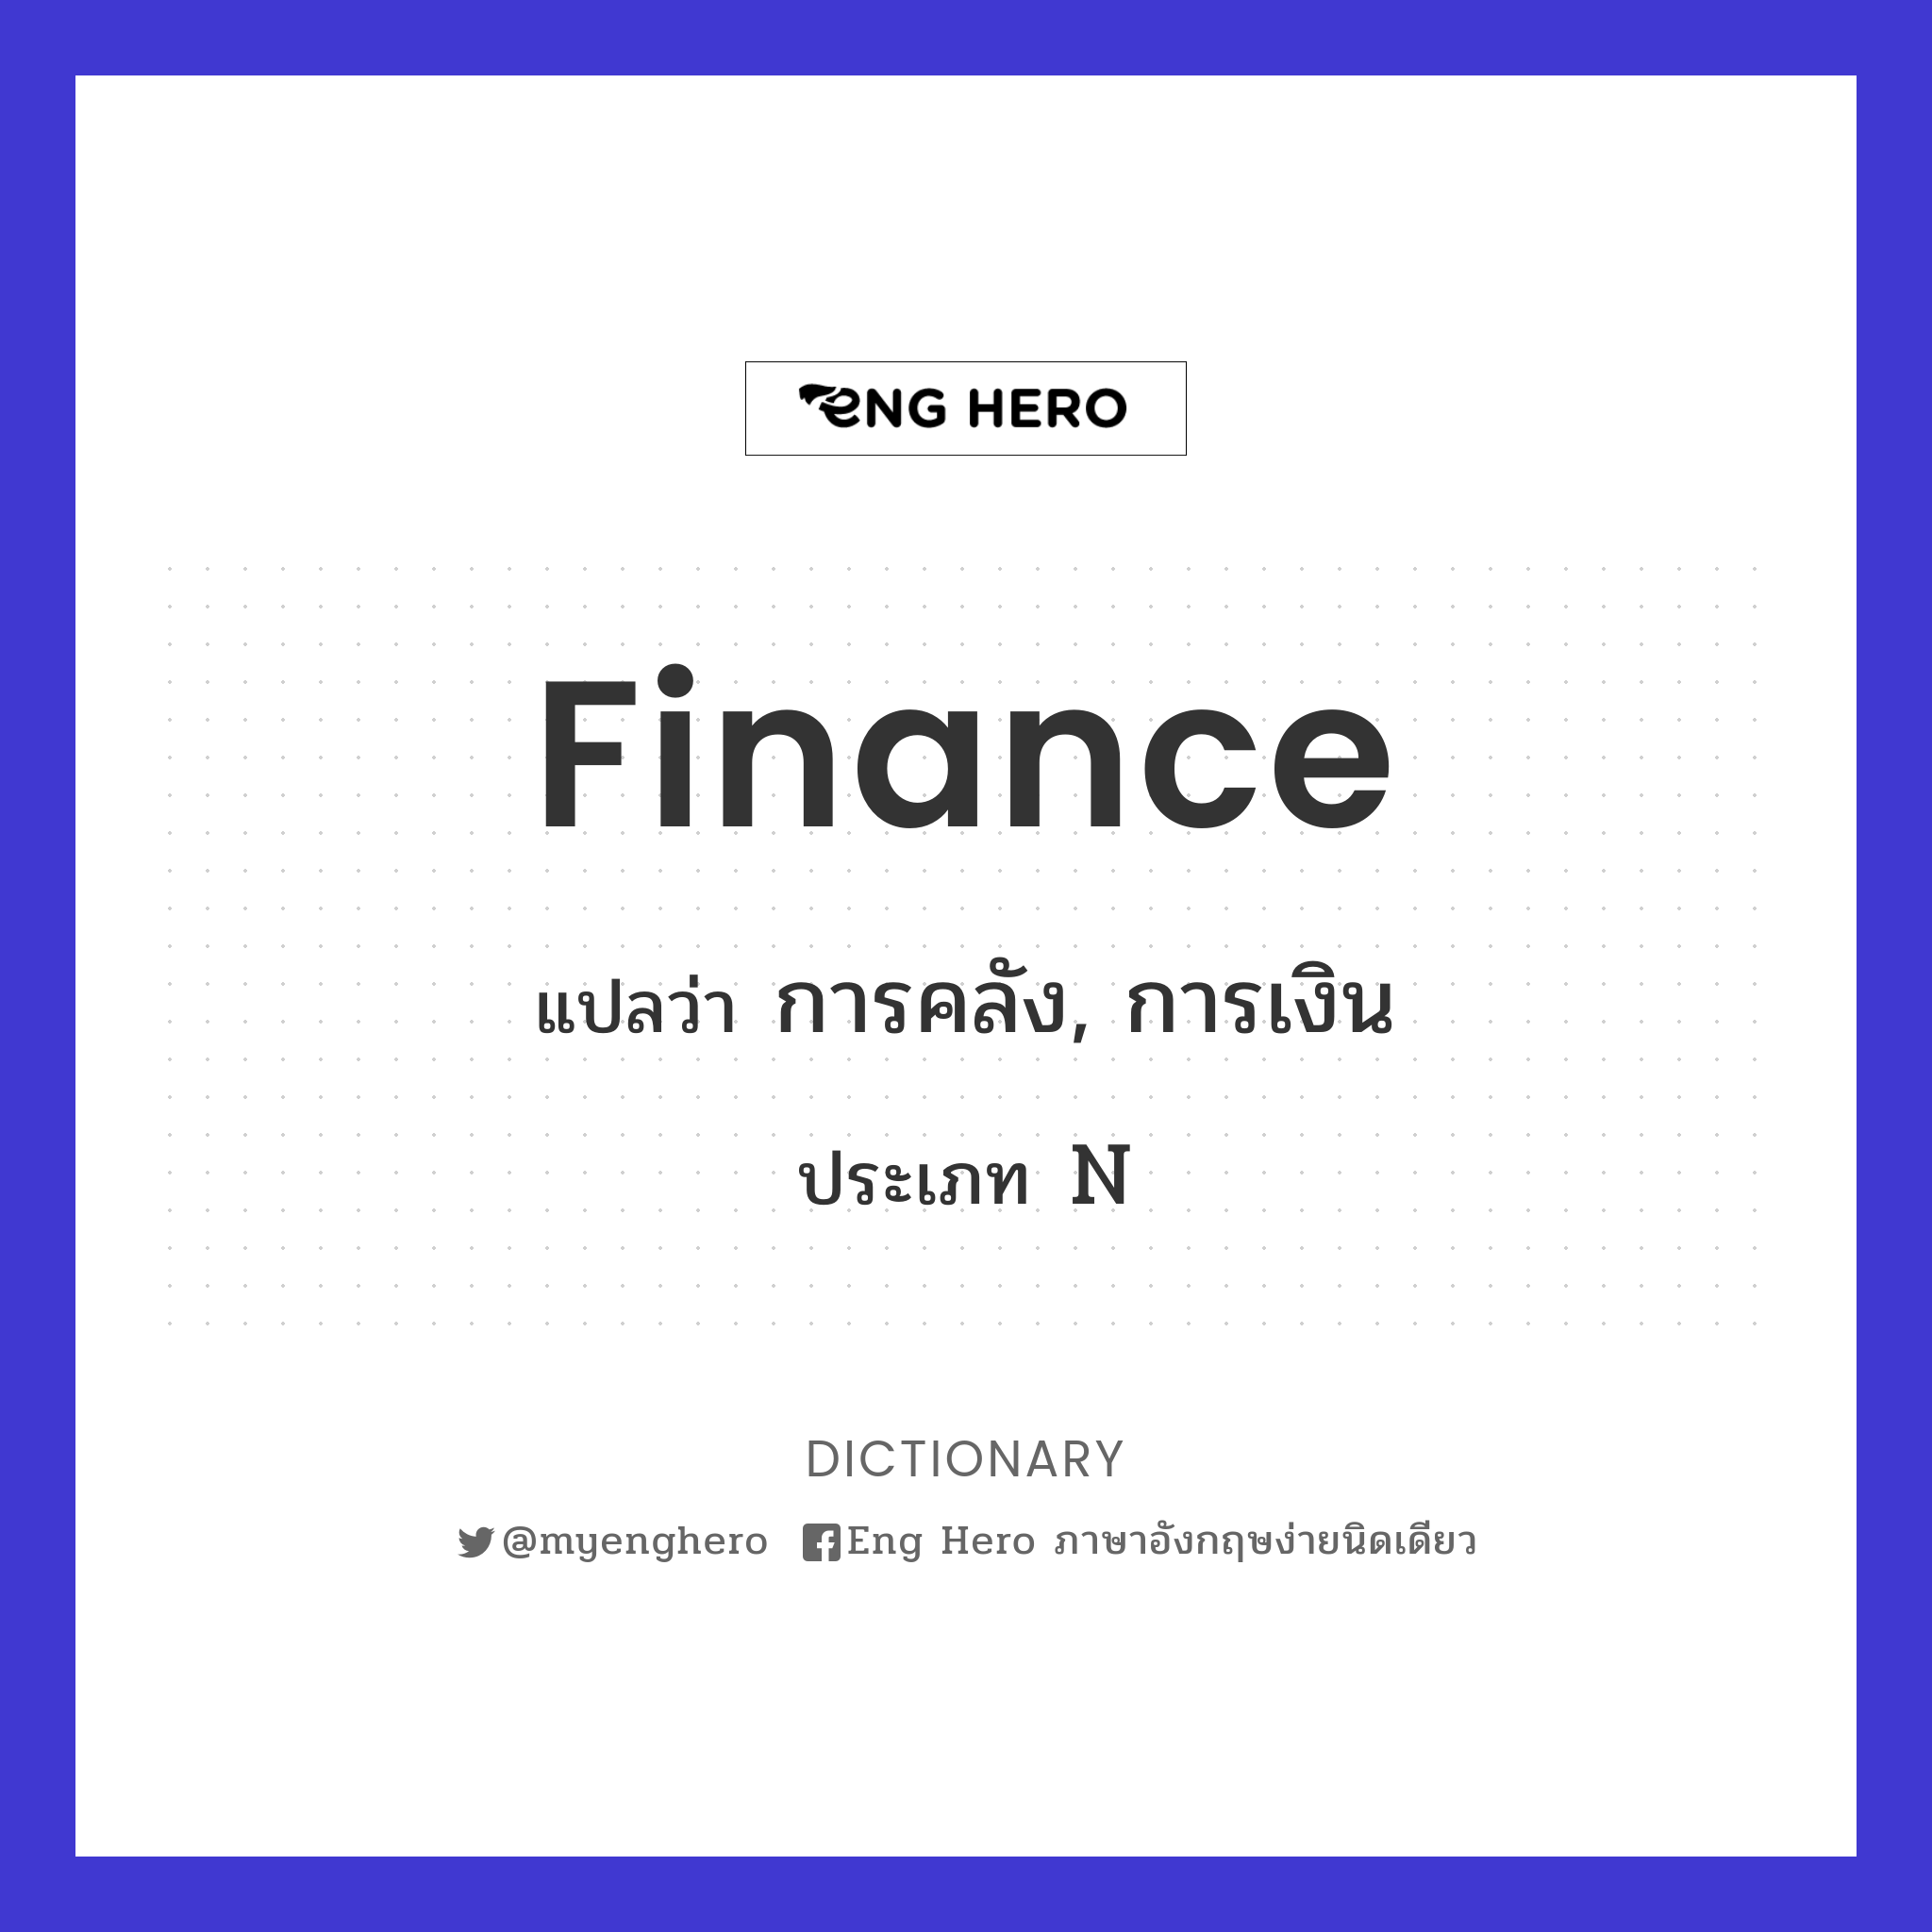 finance